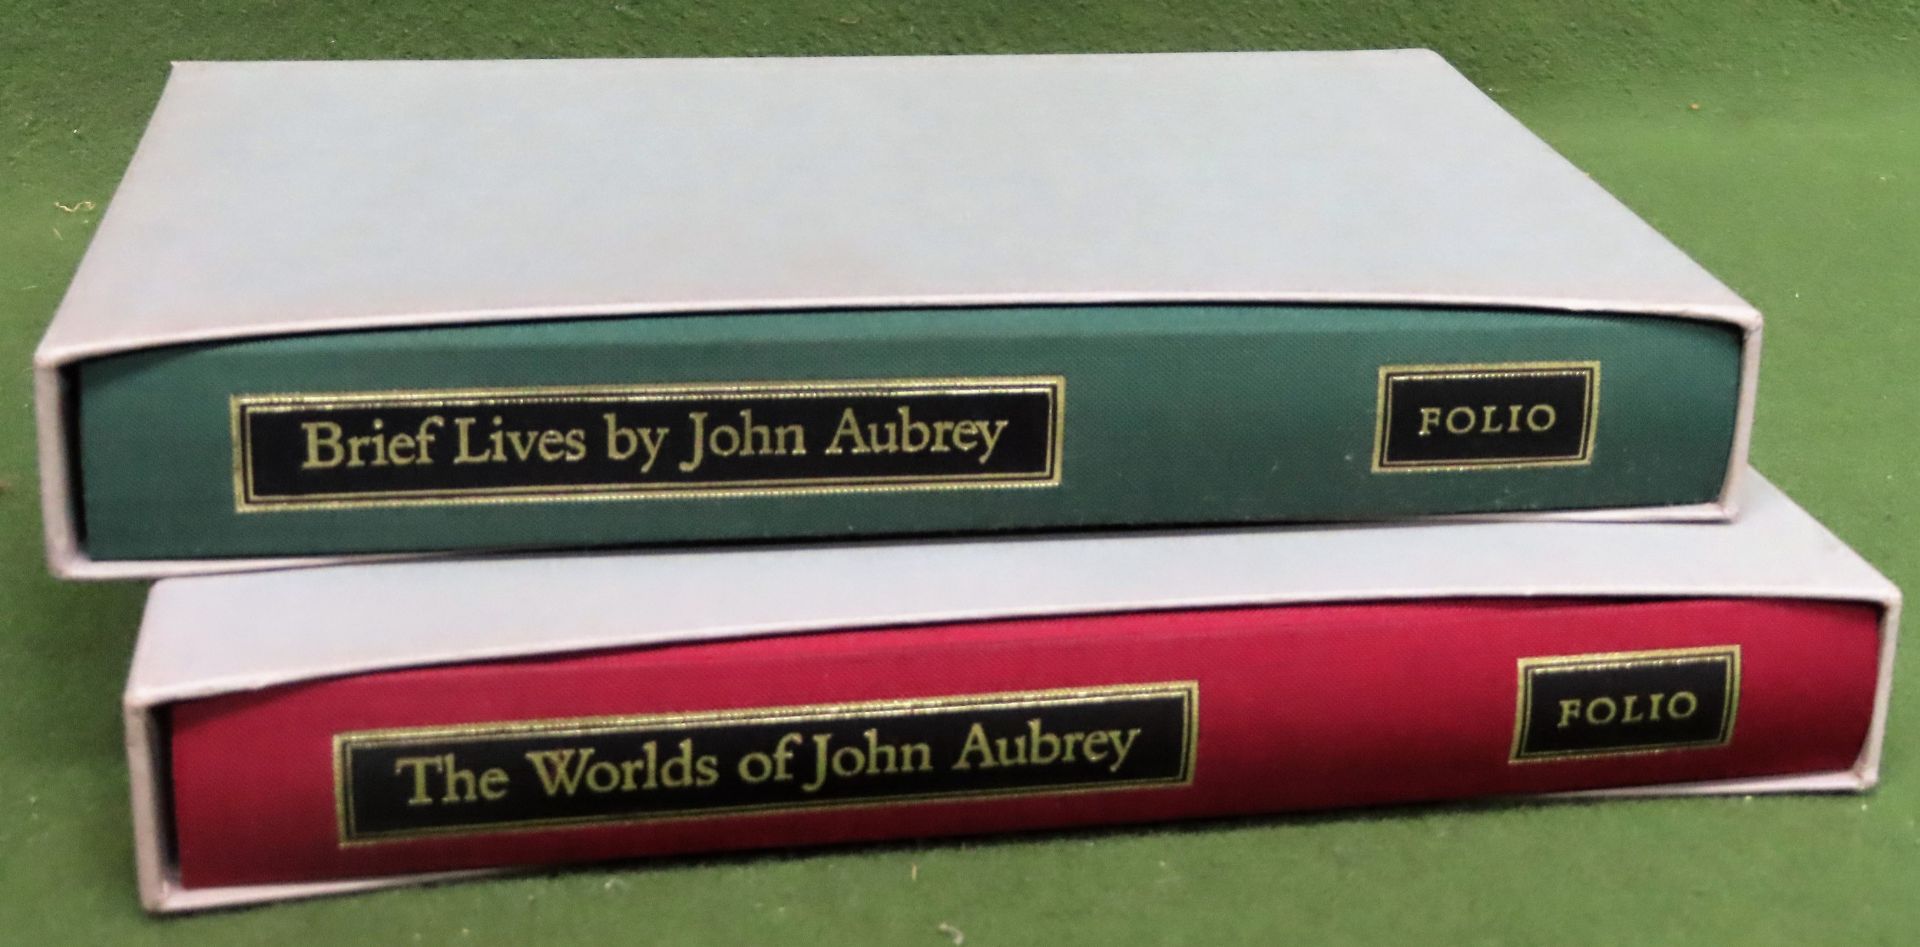 FOLIO SOCIETY TWO VOLUMES - THE WORLDS OF JOHN AUBREY & BRIEF LIVES BY JOHN AUBREY REASONABLE USED